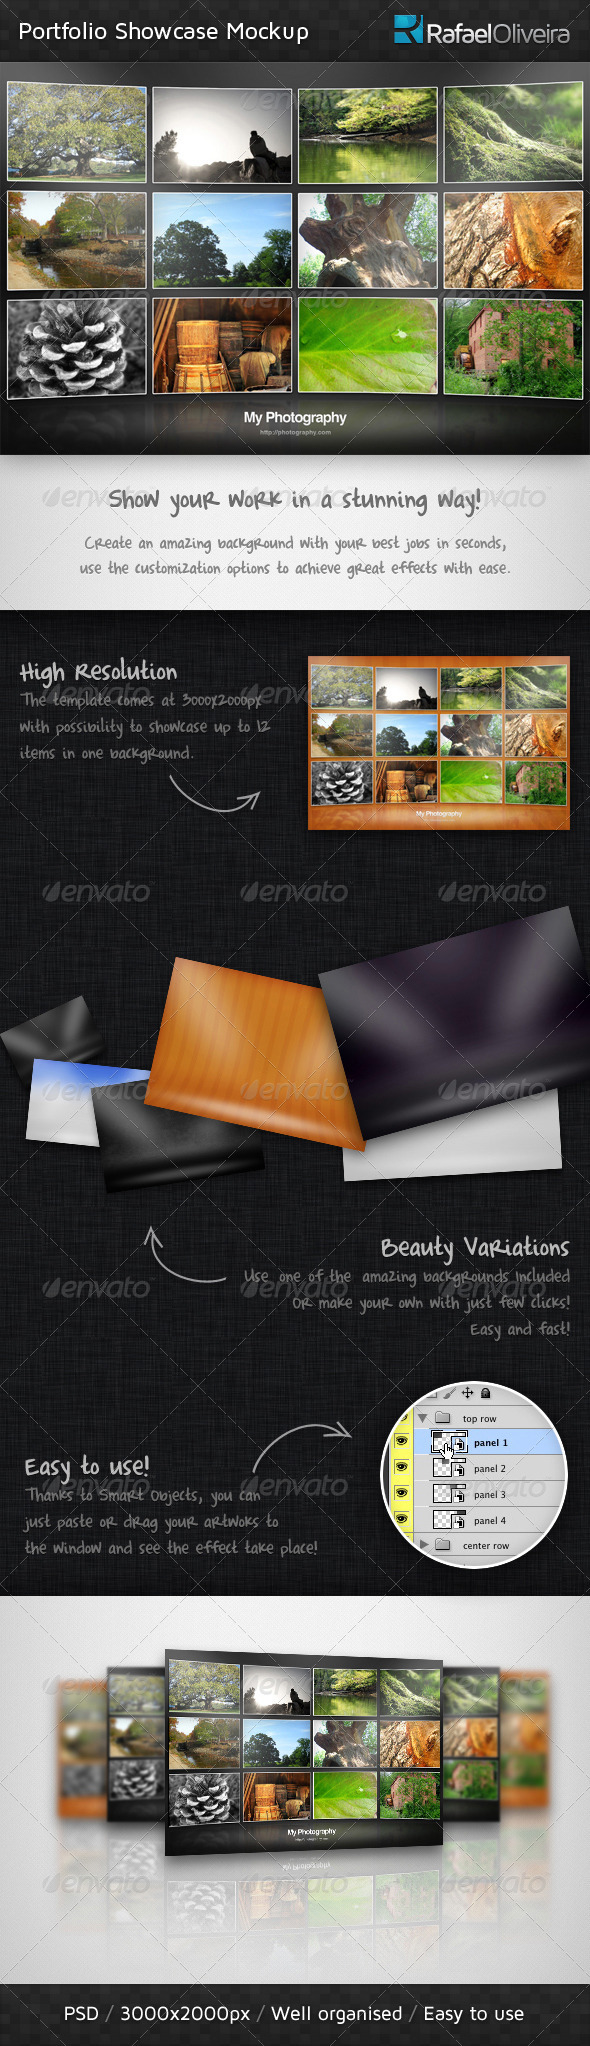 Download Portfolio Mockup Graphics Designs Templates From Graphicriver PSD Mockup Templates